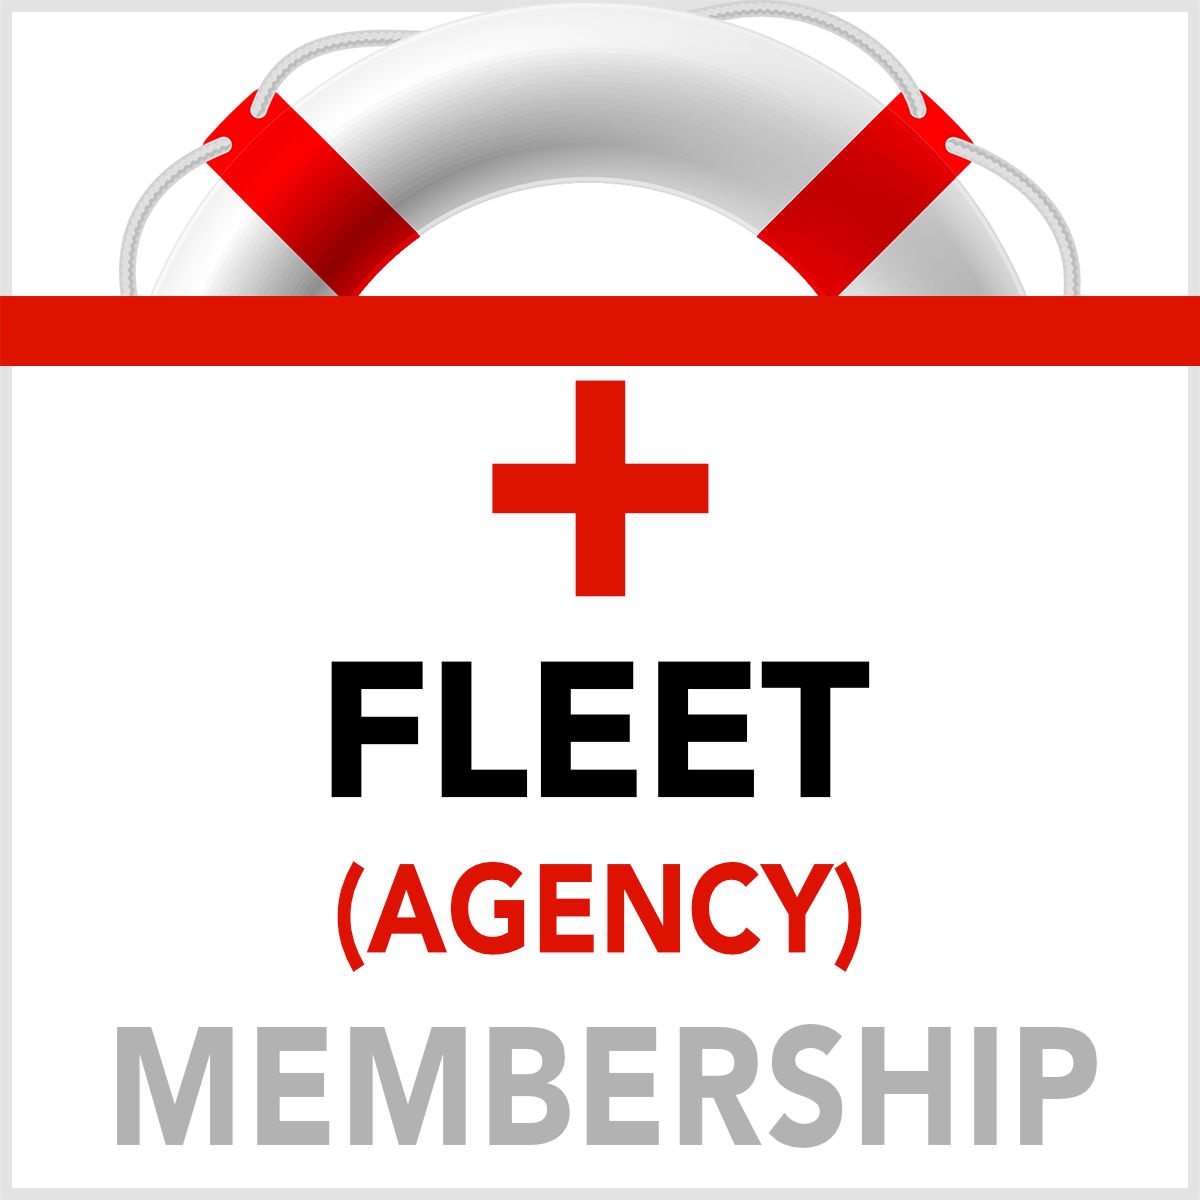 UWP fleet agency membership Chicago Website Design SEO Company